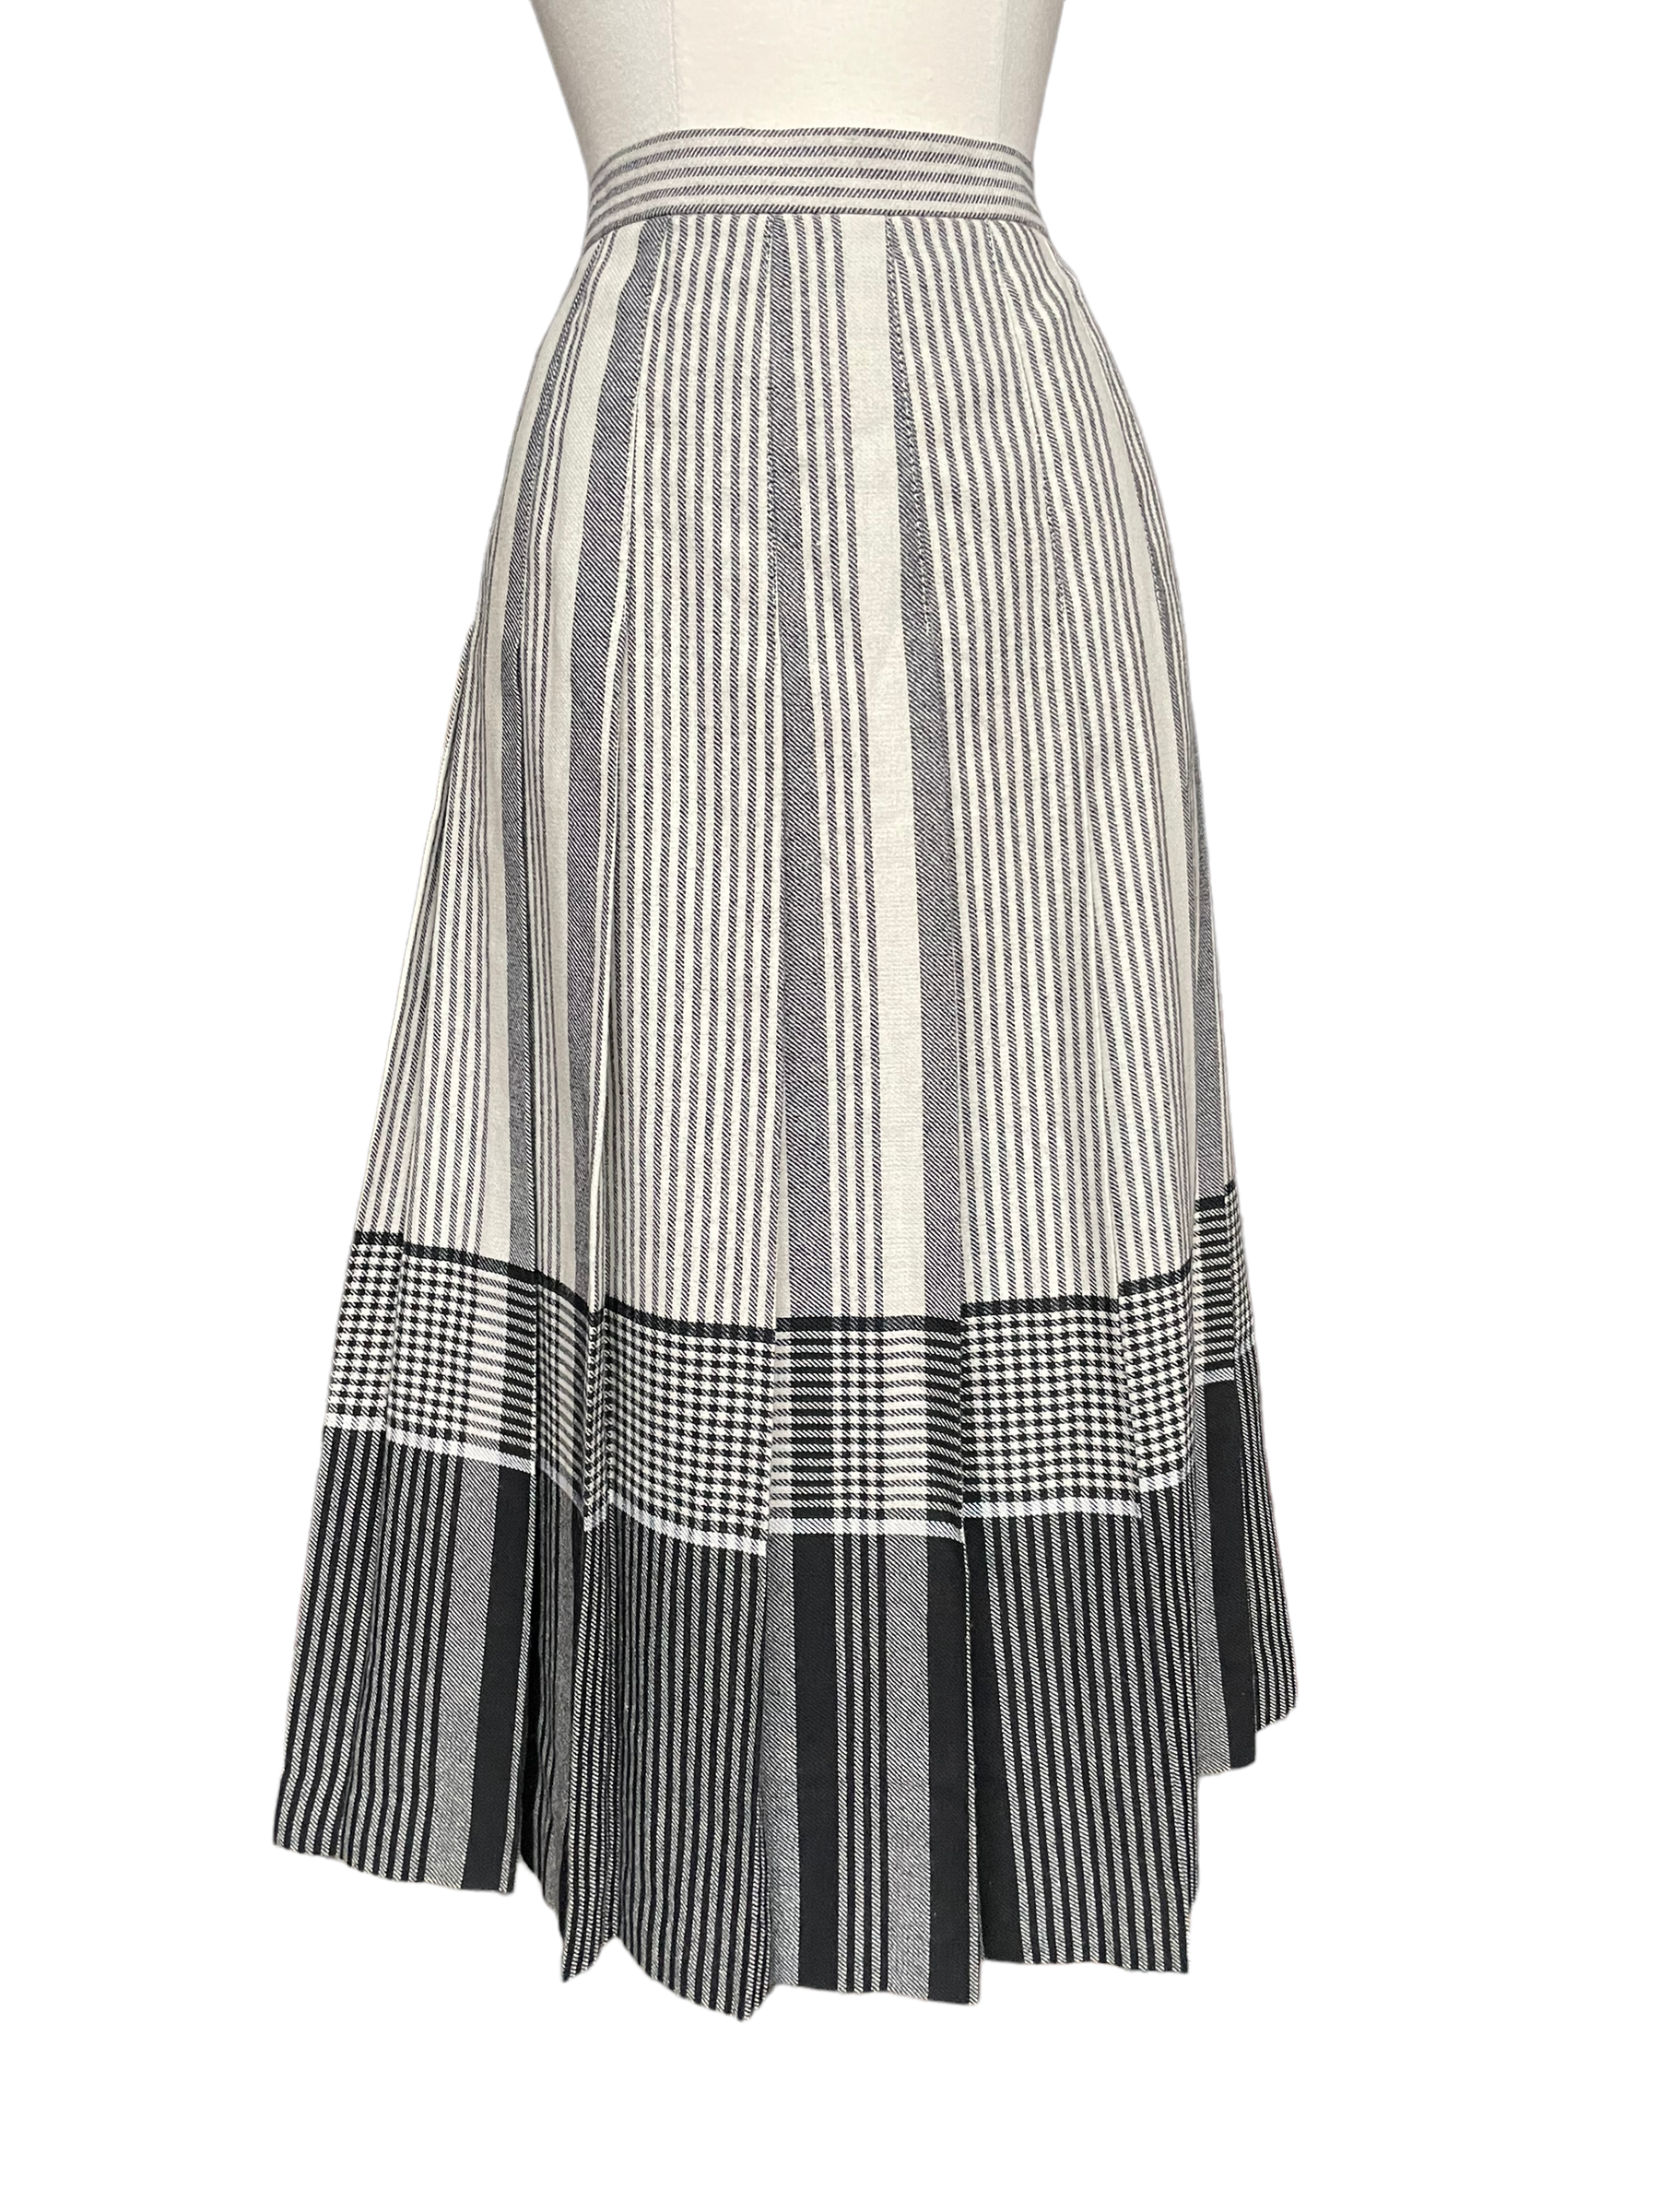 Full front view of Vintage 1970s Koret Pleated Skirt SZ Sm | Barn Owl Seattle | Vintage Ladies Skirts